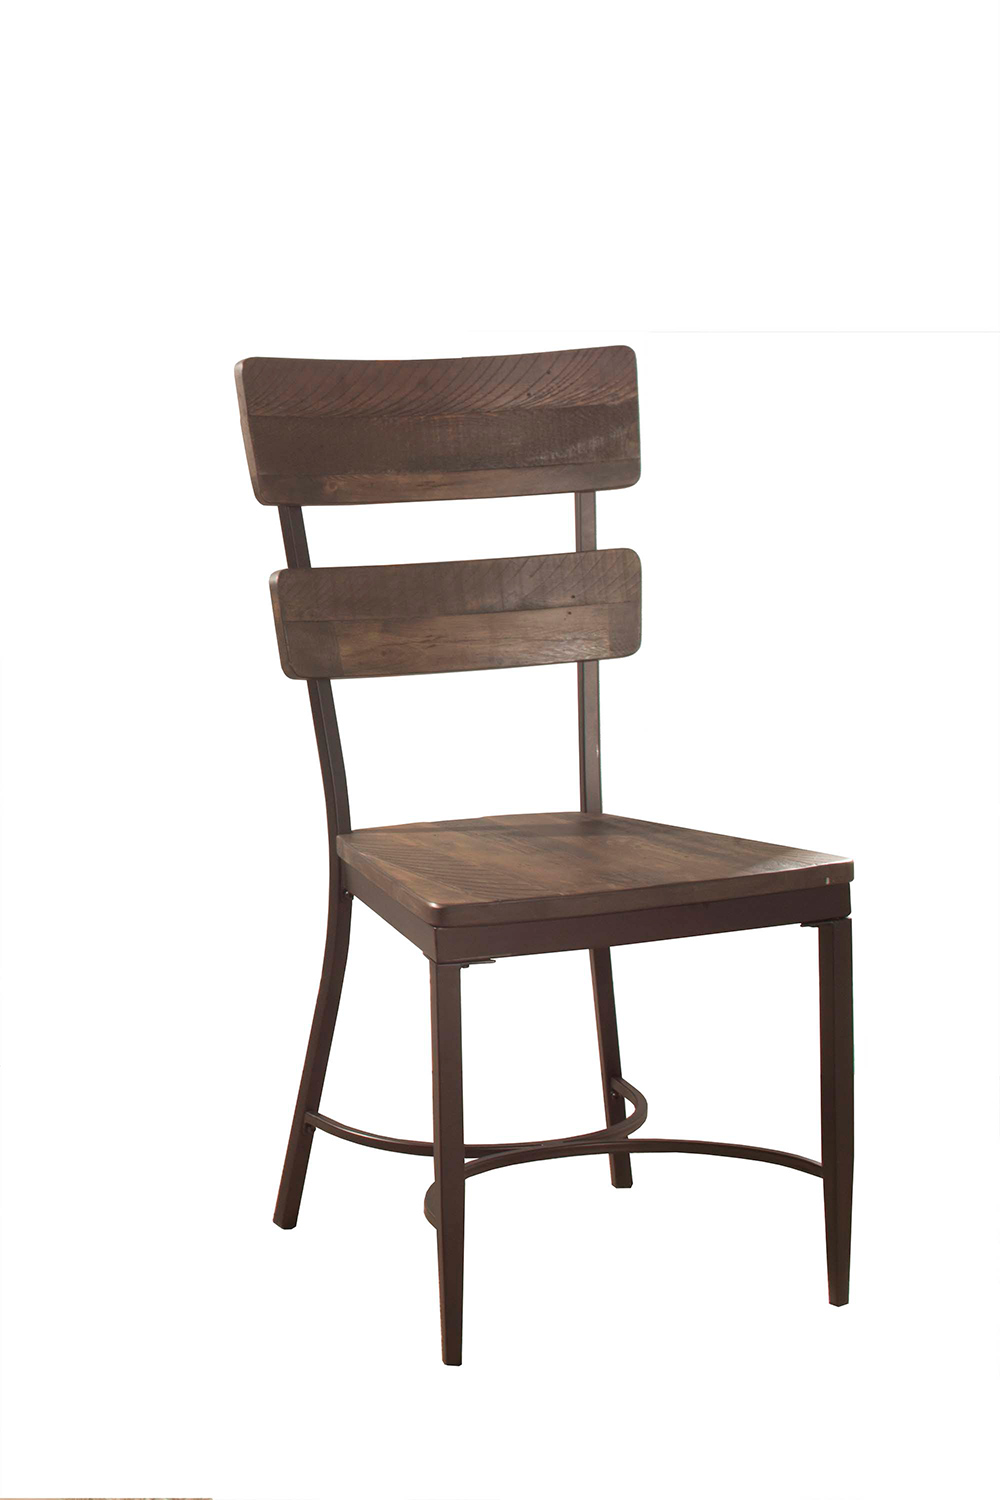 Hillsdale Casselberry Desk Chair - Walnut/Brown Metal